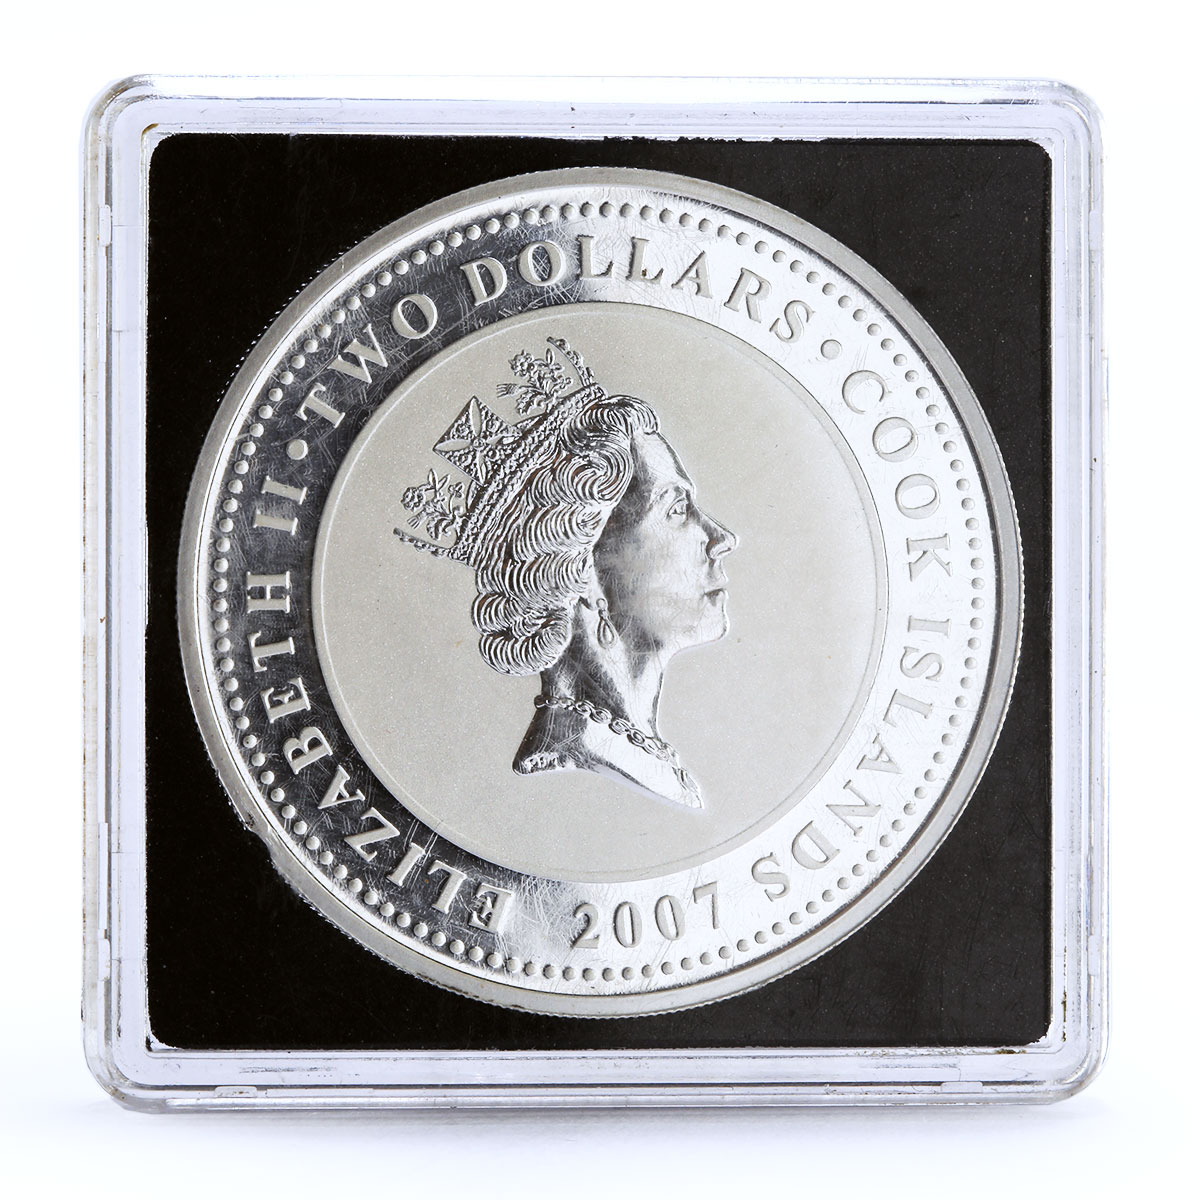 Cook Islands 2 dollars Literature Adventures of Sherlock Holmes silver coin 2007